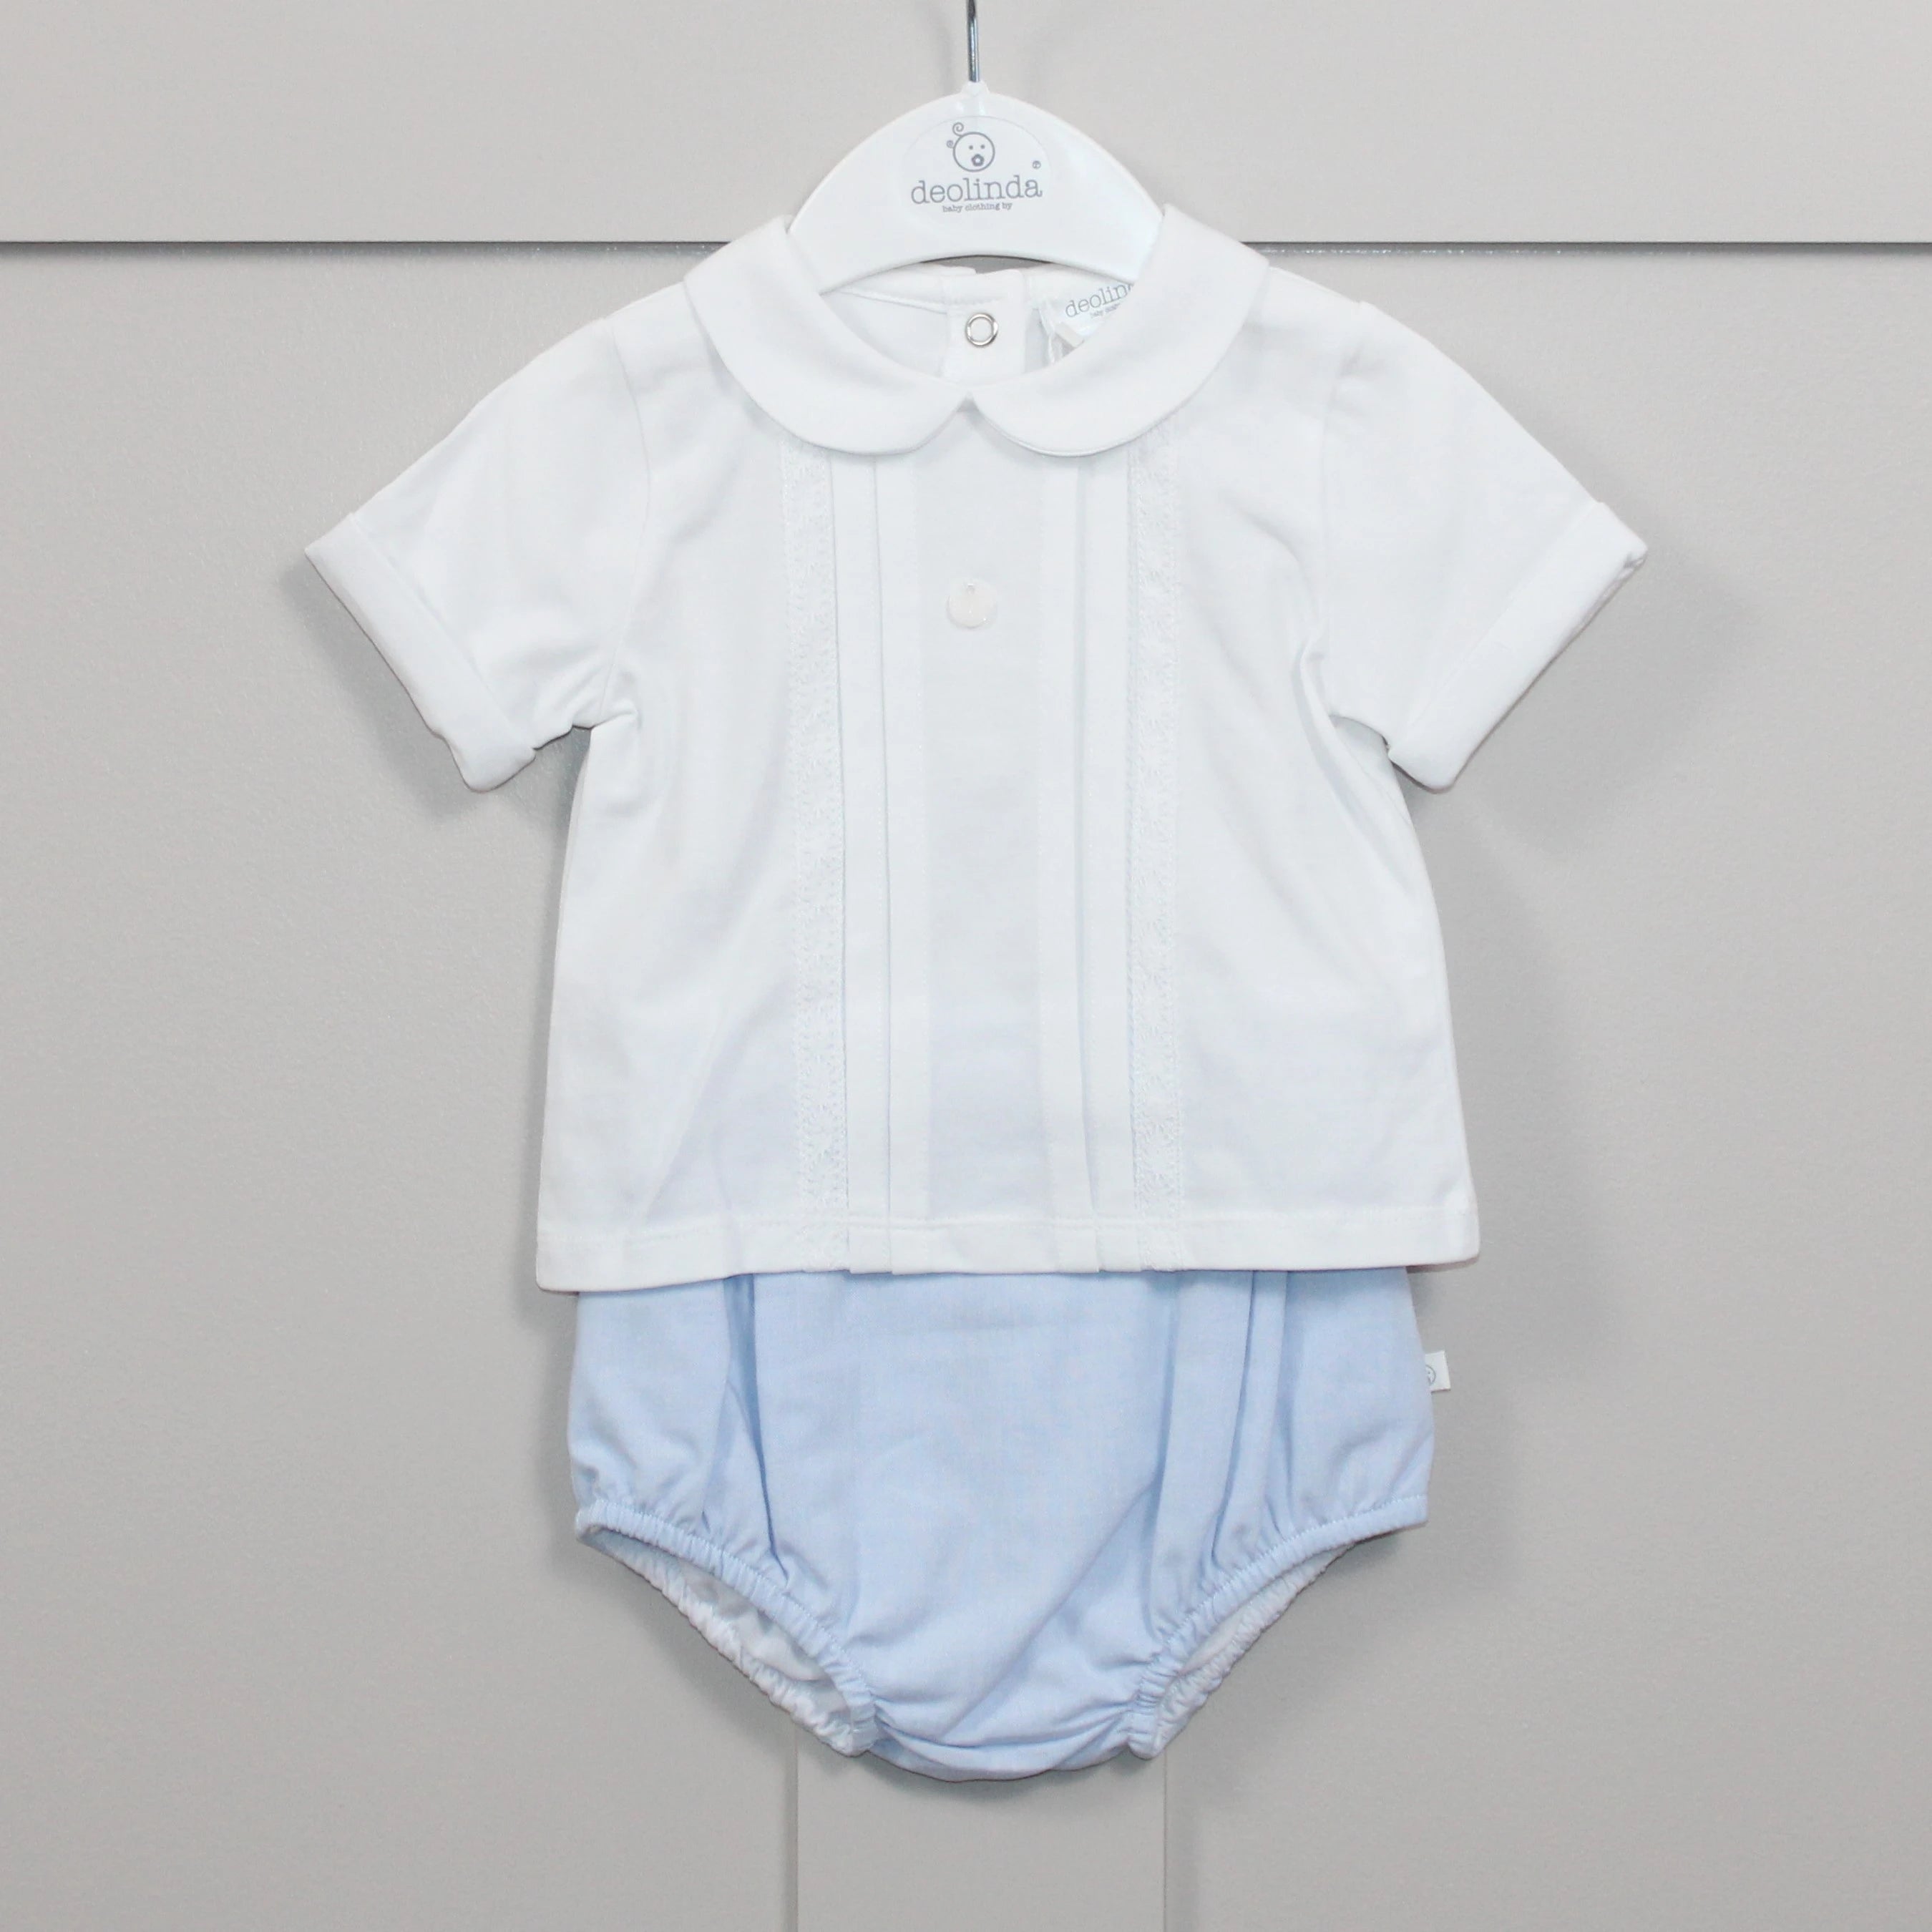 deolinda Adonis Shirt and Shorts Set